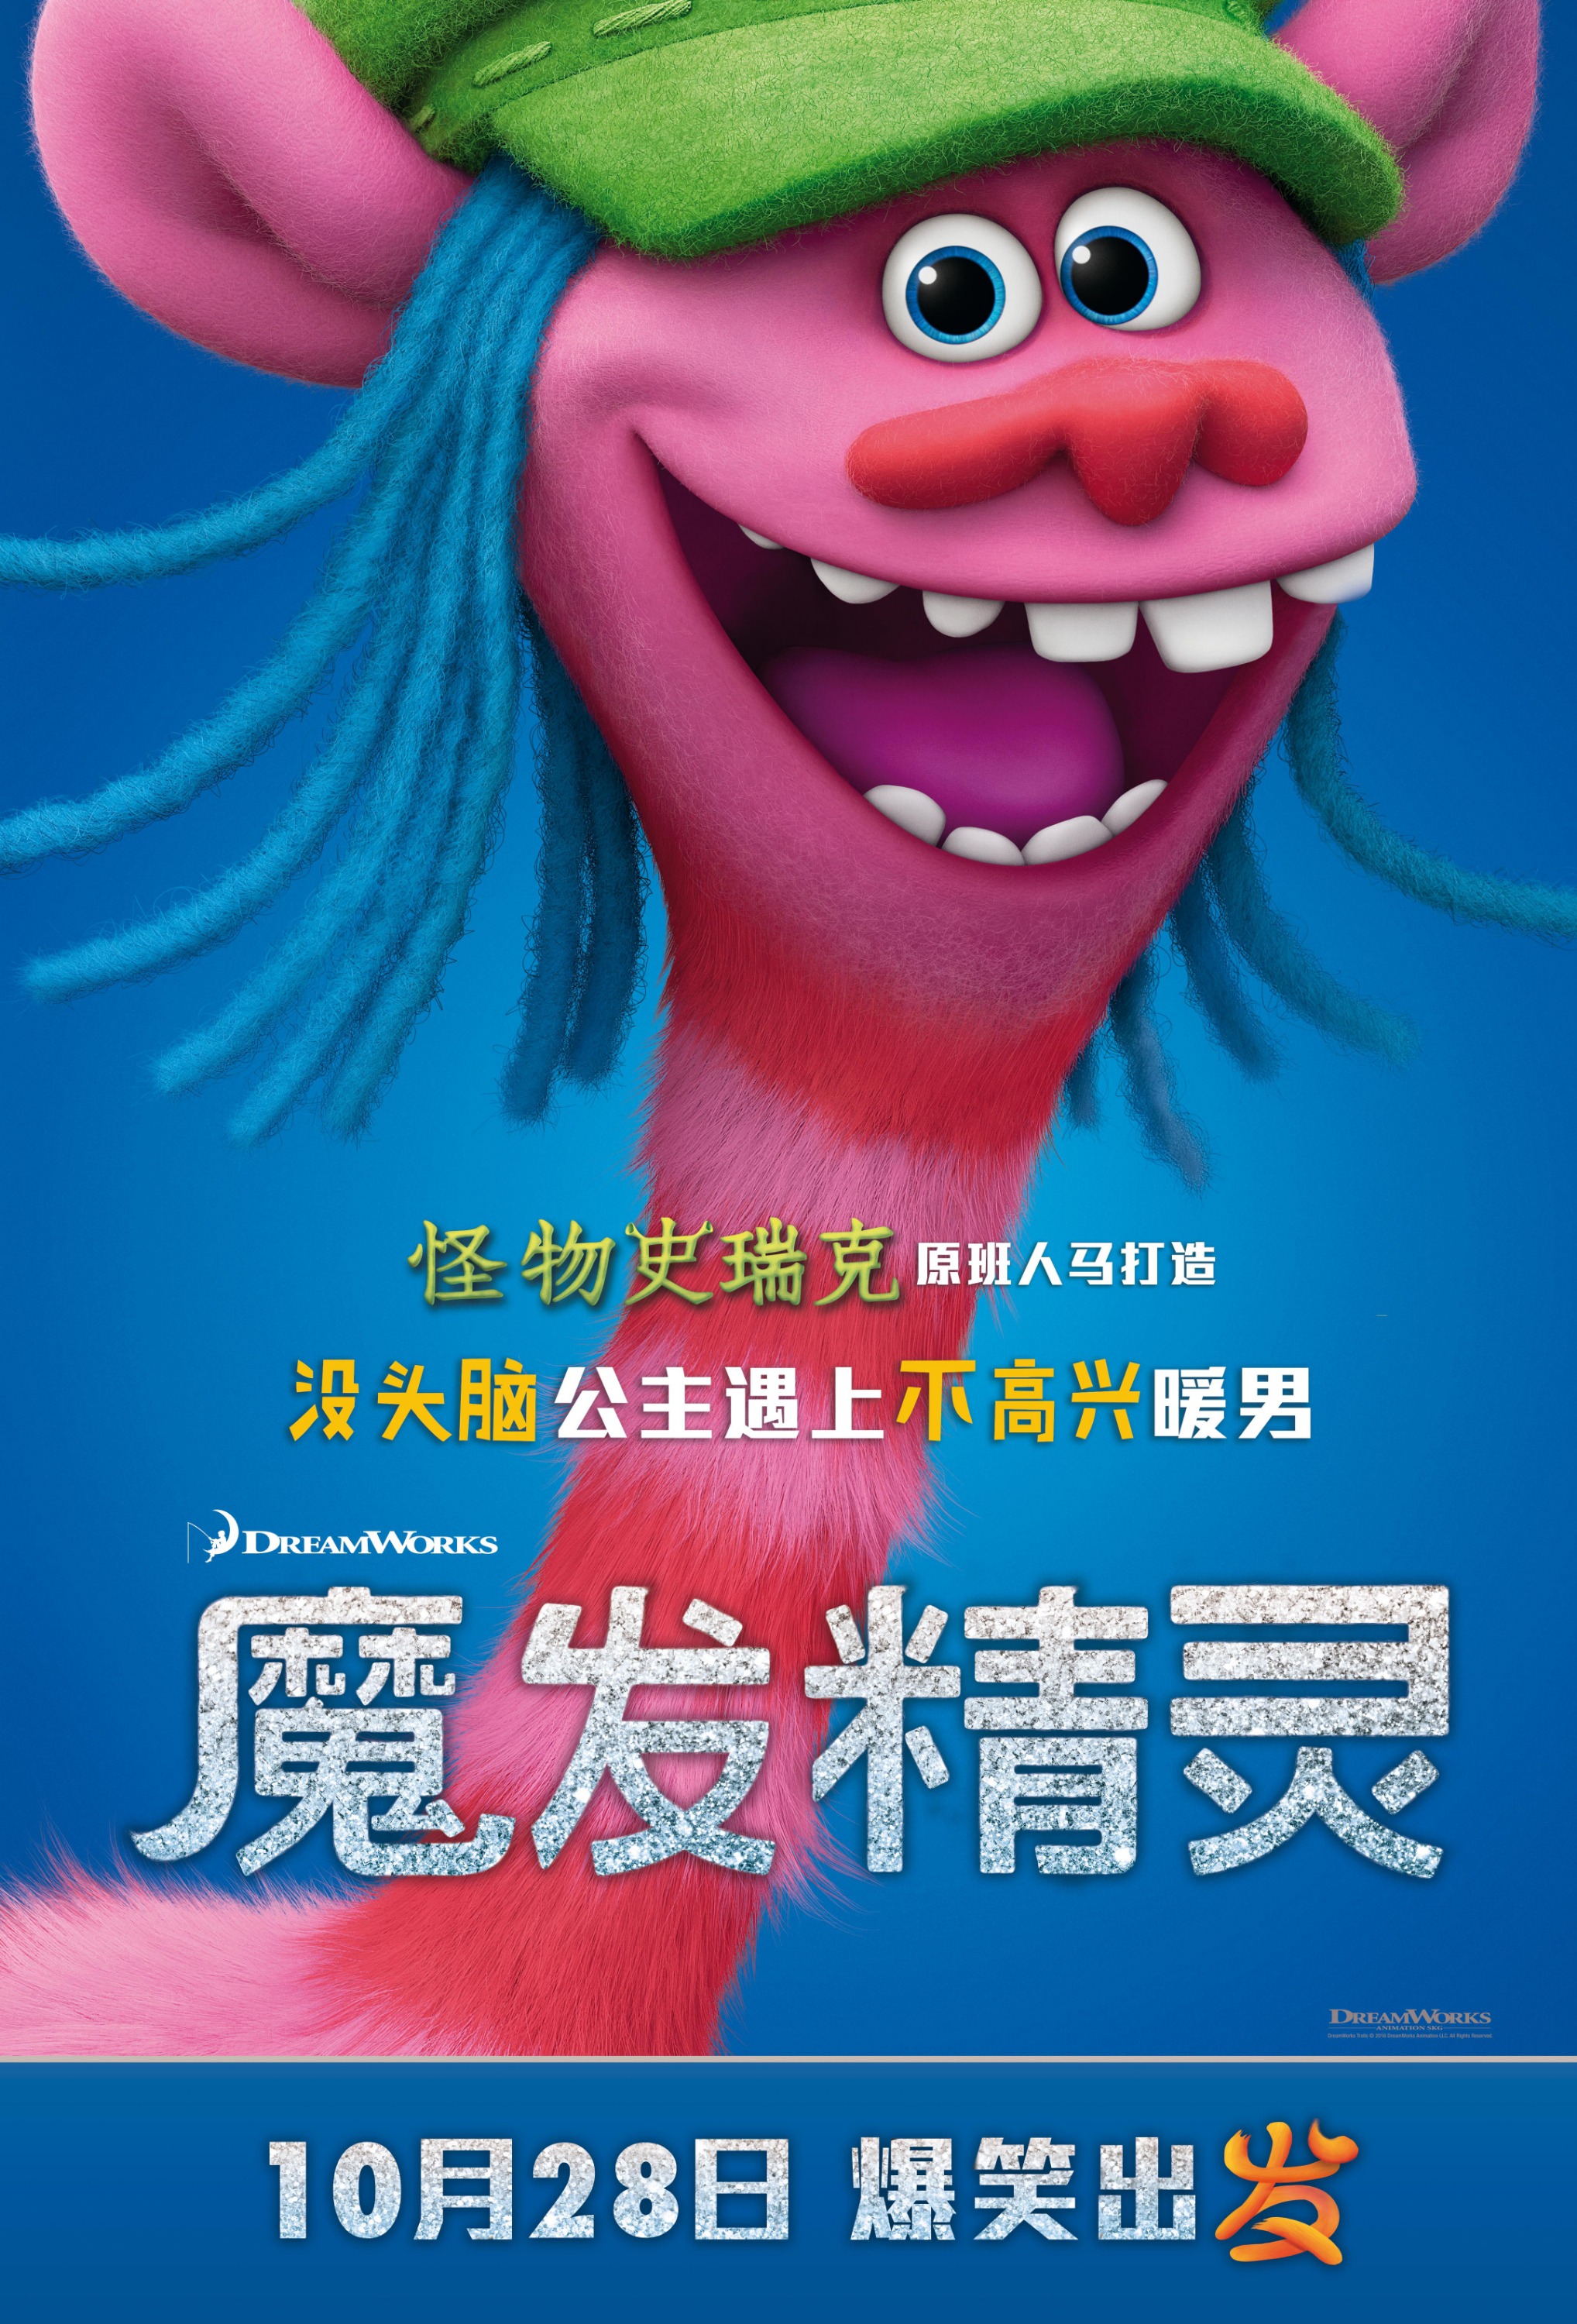 Mega Sized Movie Poster Image for Trolls (#16 of 20)